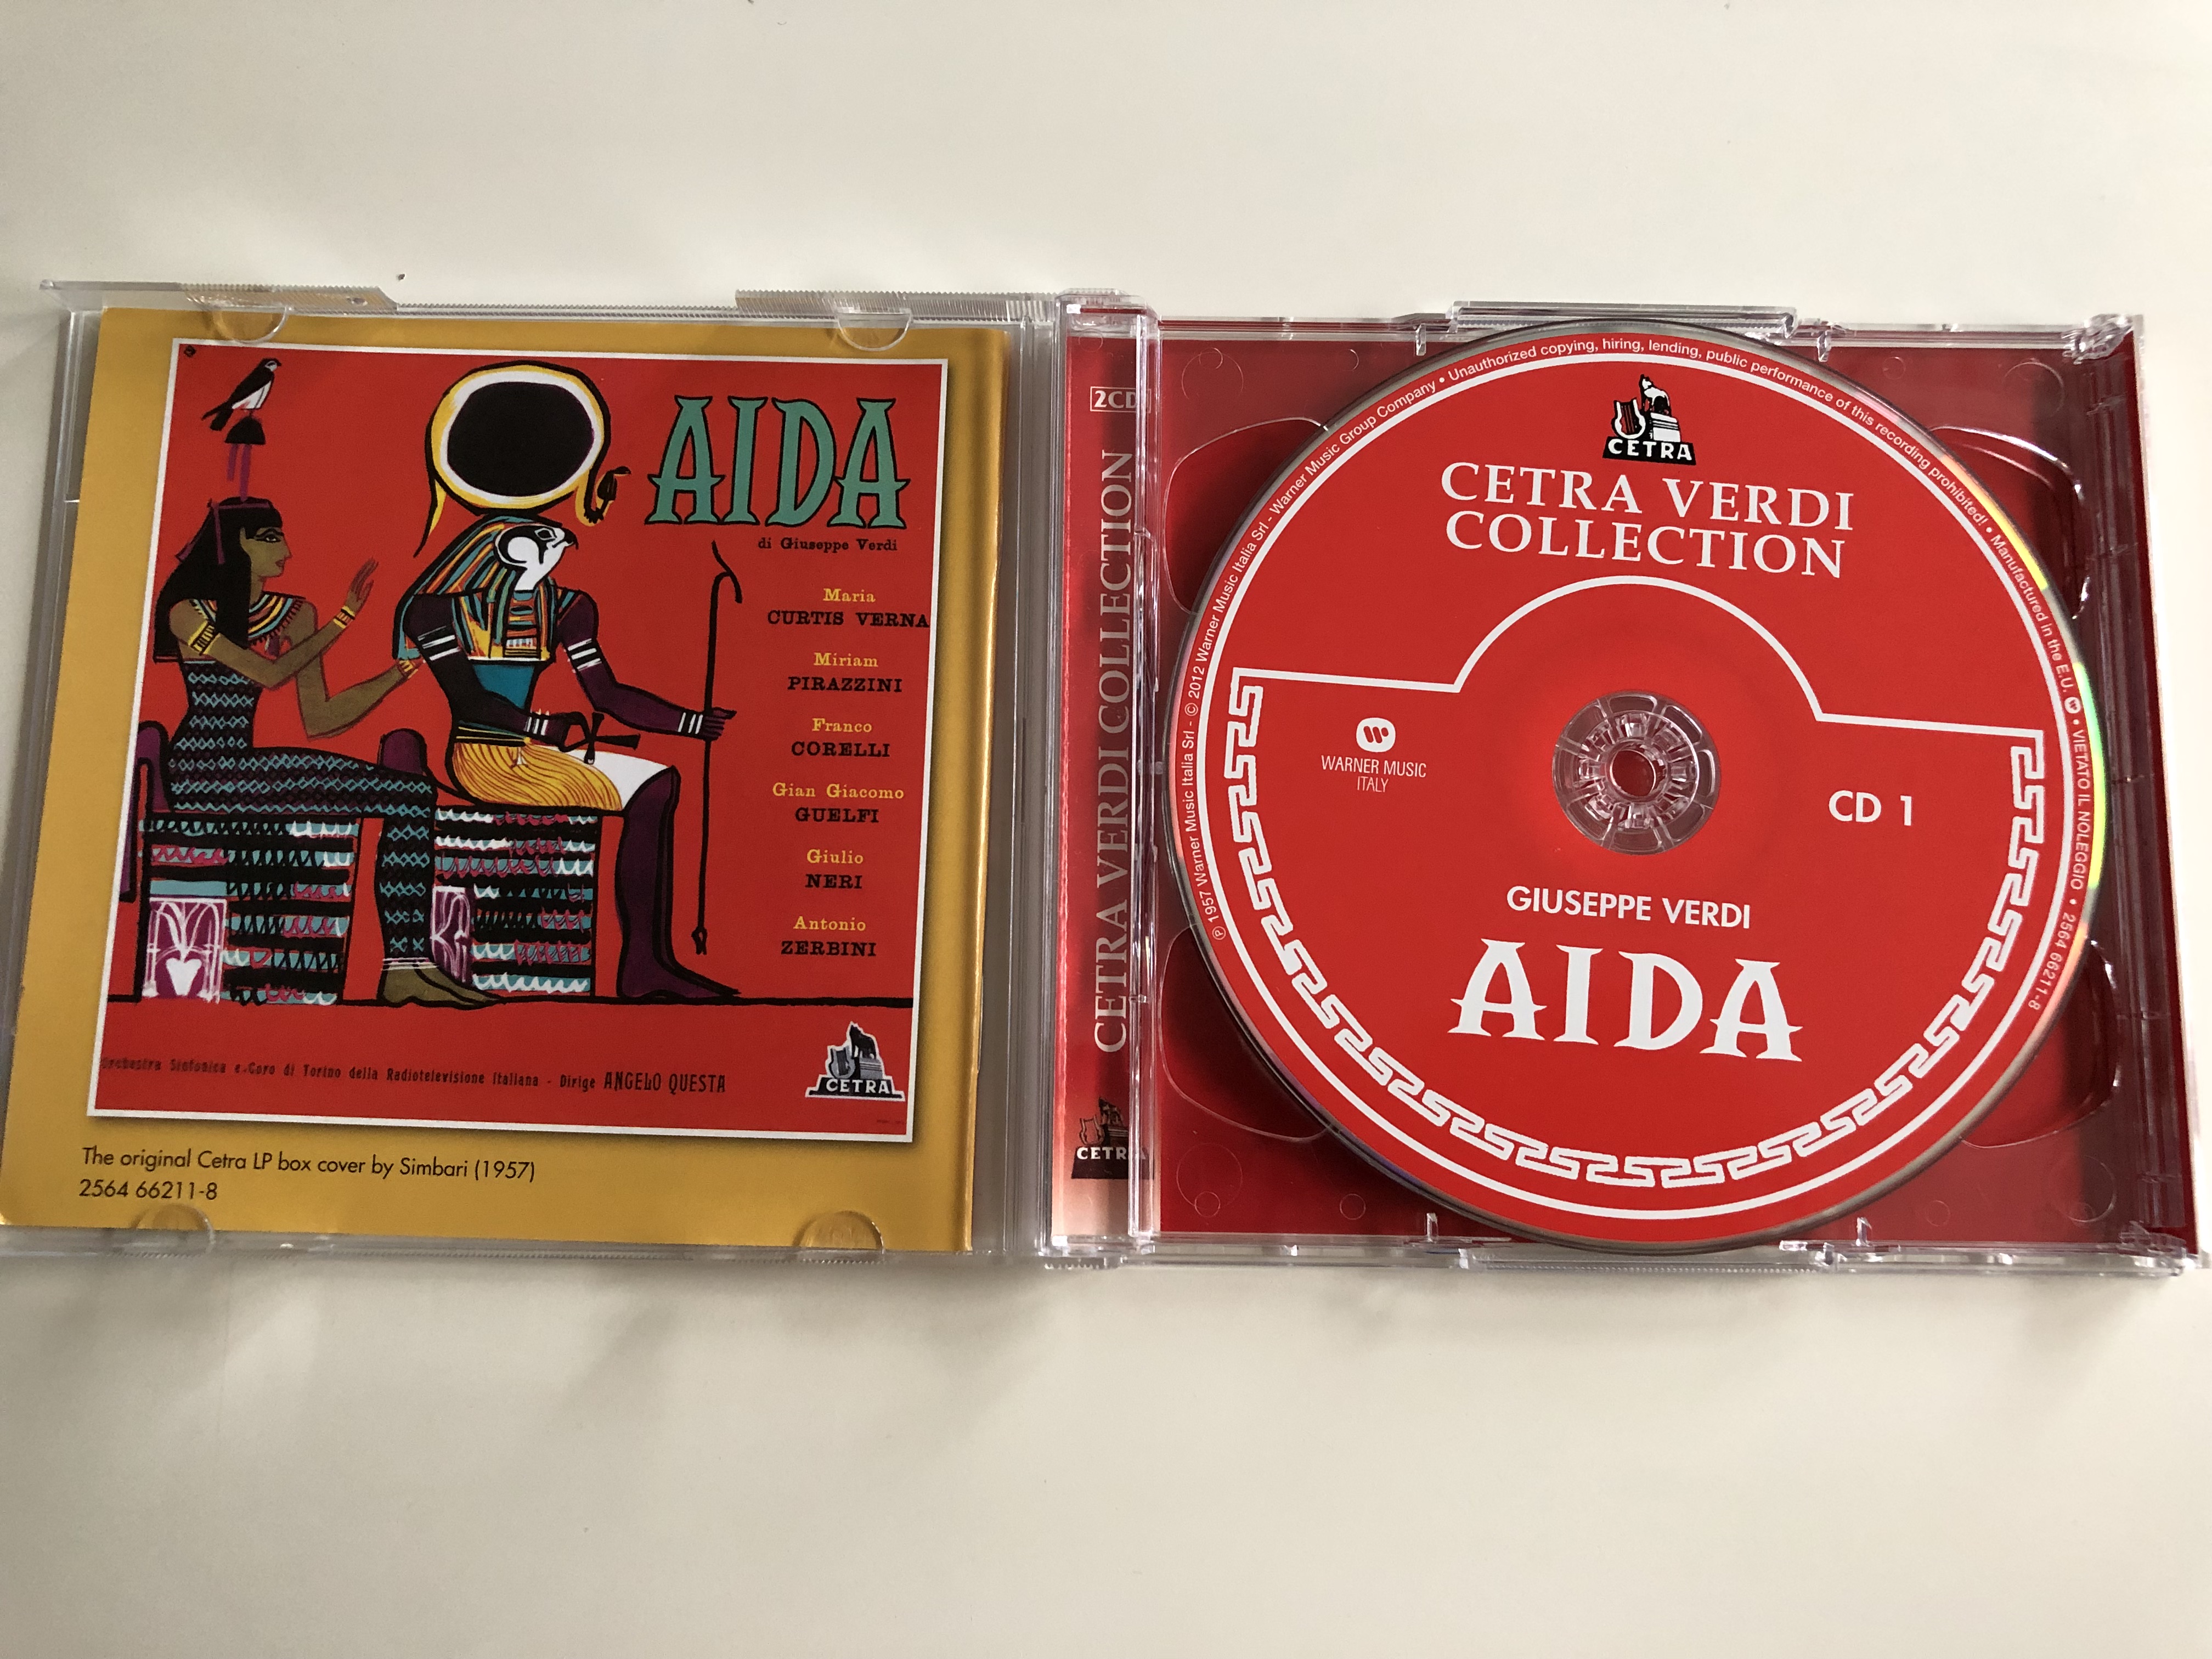 giuseppe-verdi-aida-cetra-verdi-collection-warner-music-italy-audio-cd-2012-2564-66211-8-8-.jpg